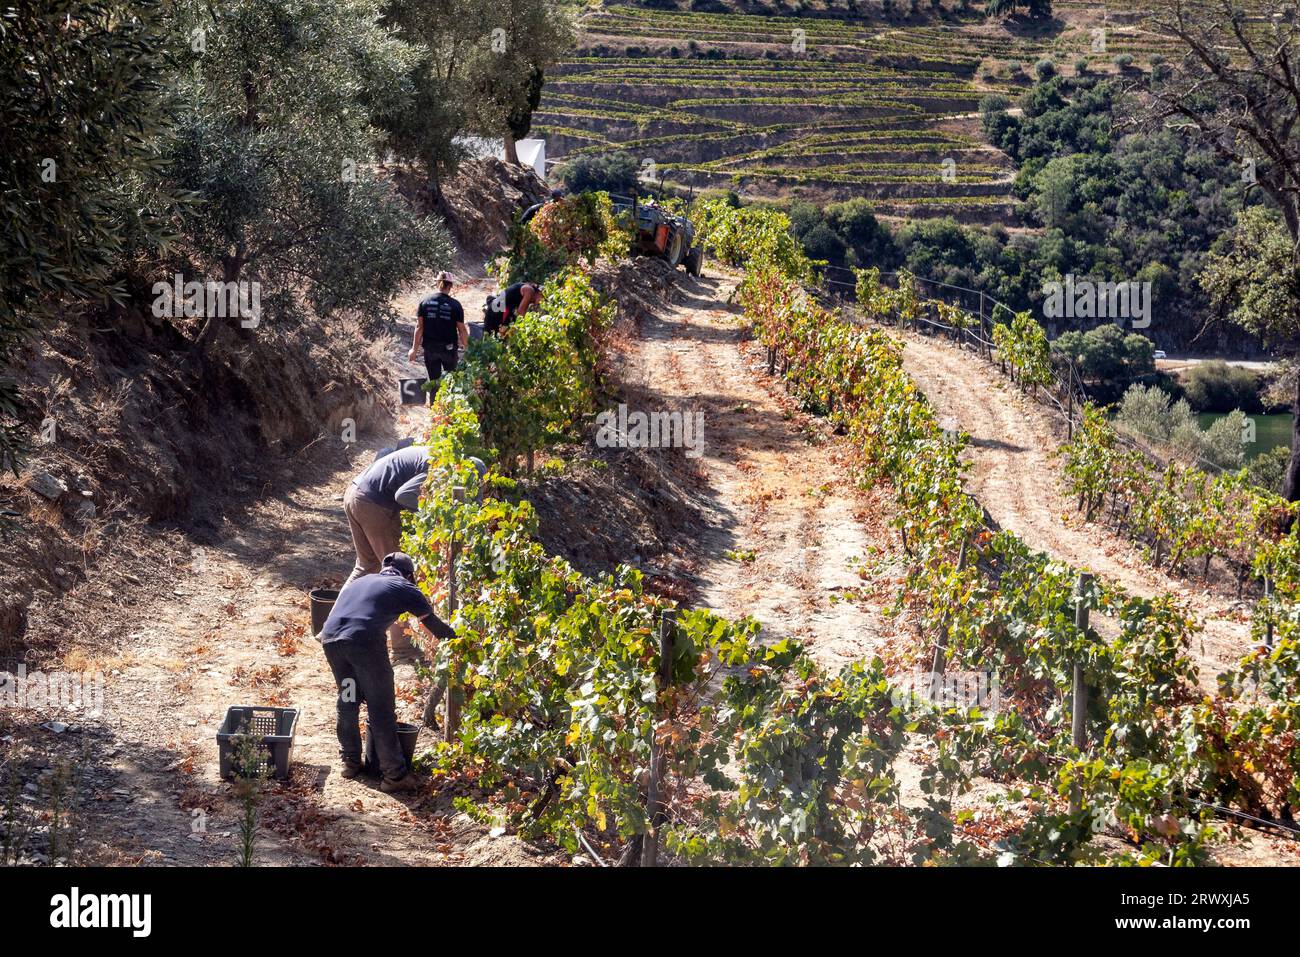 Workers harvesting grapes, Covas do Douro, Sabrosa, Portugal Stock Photo